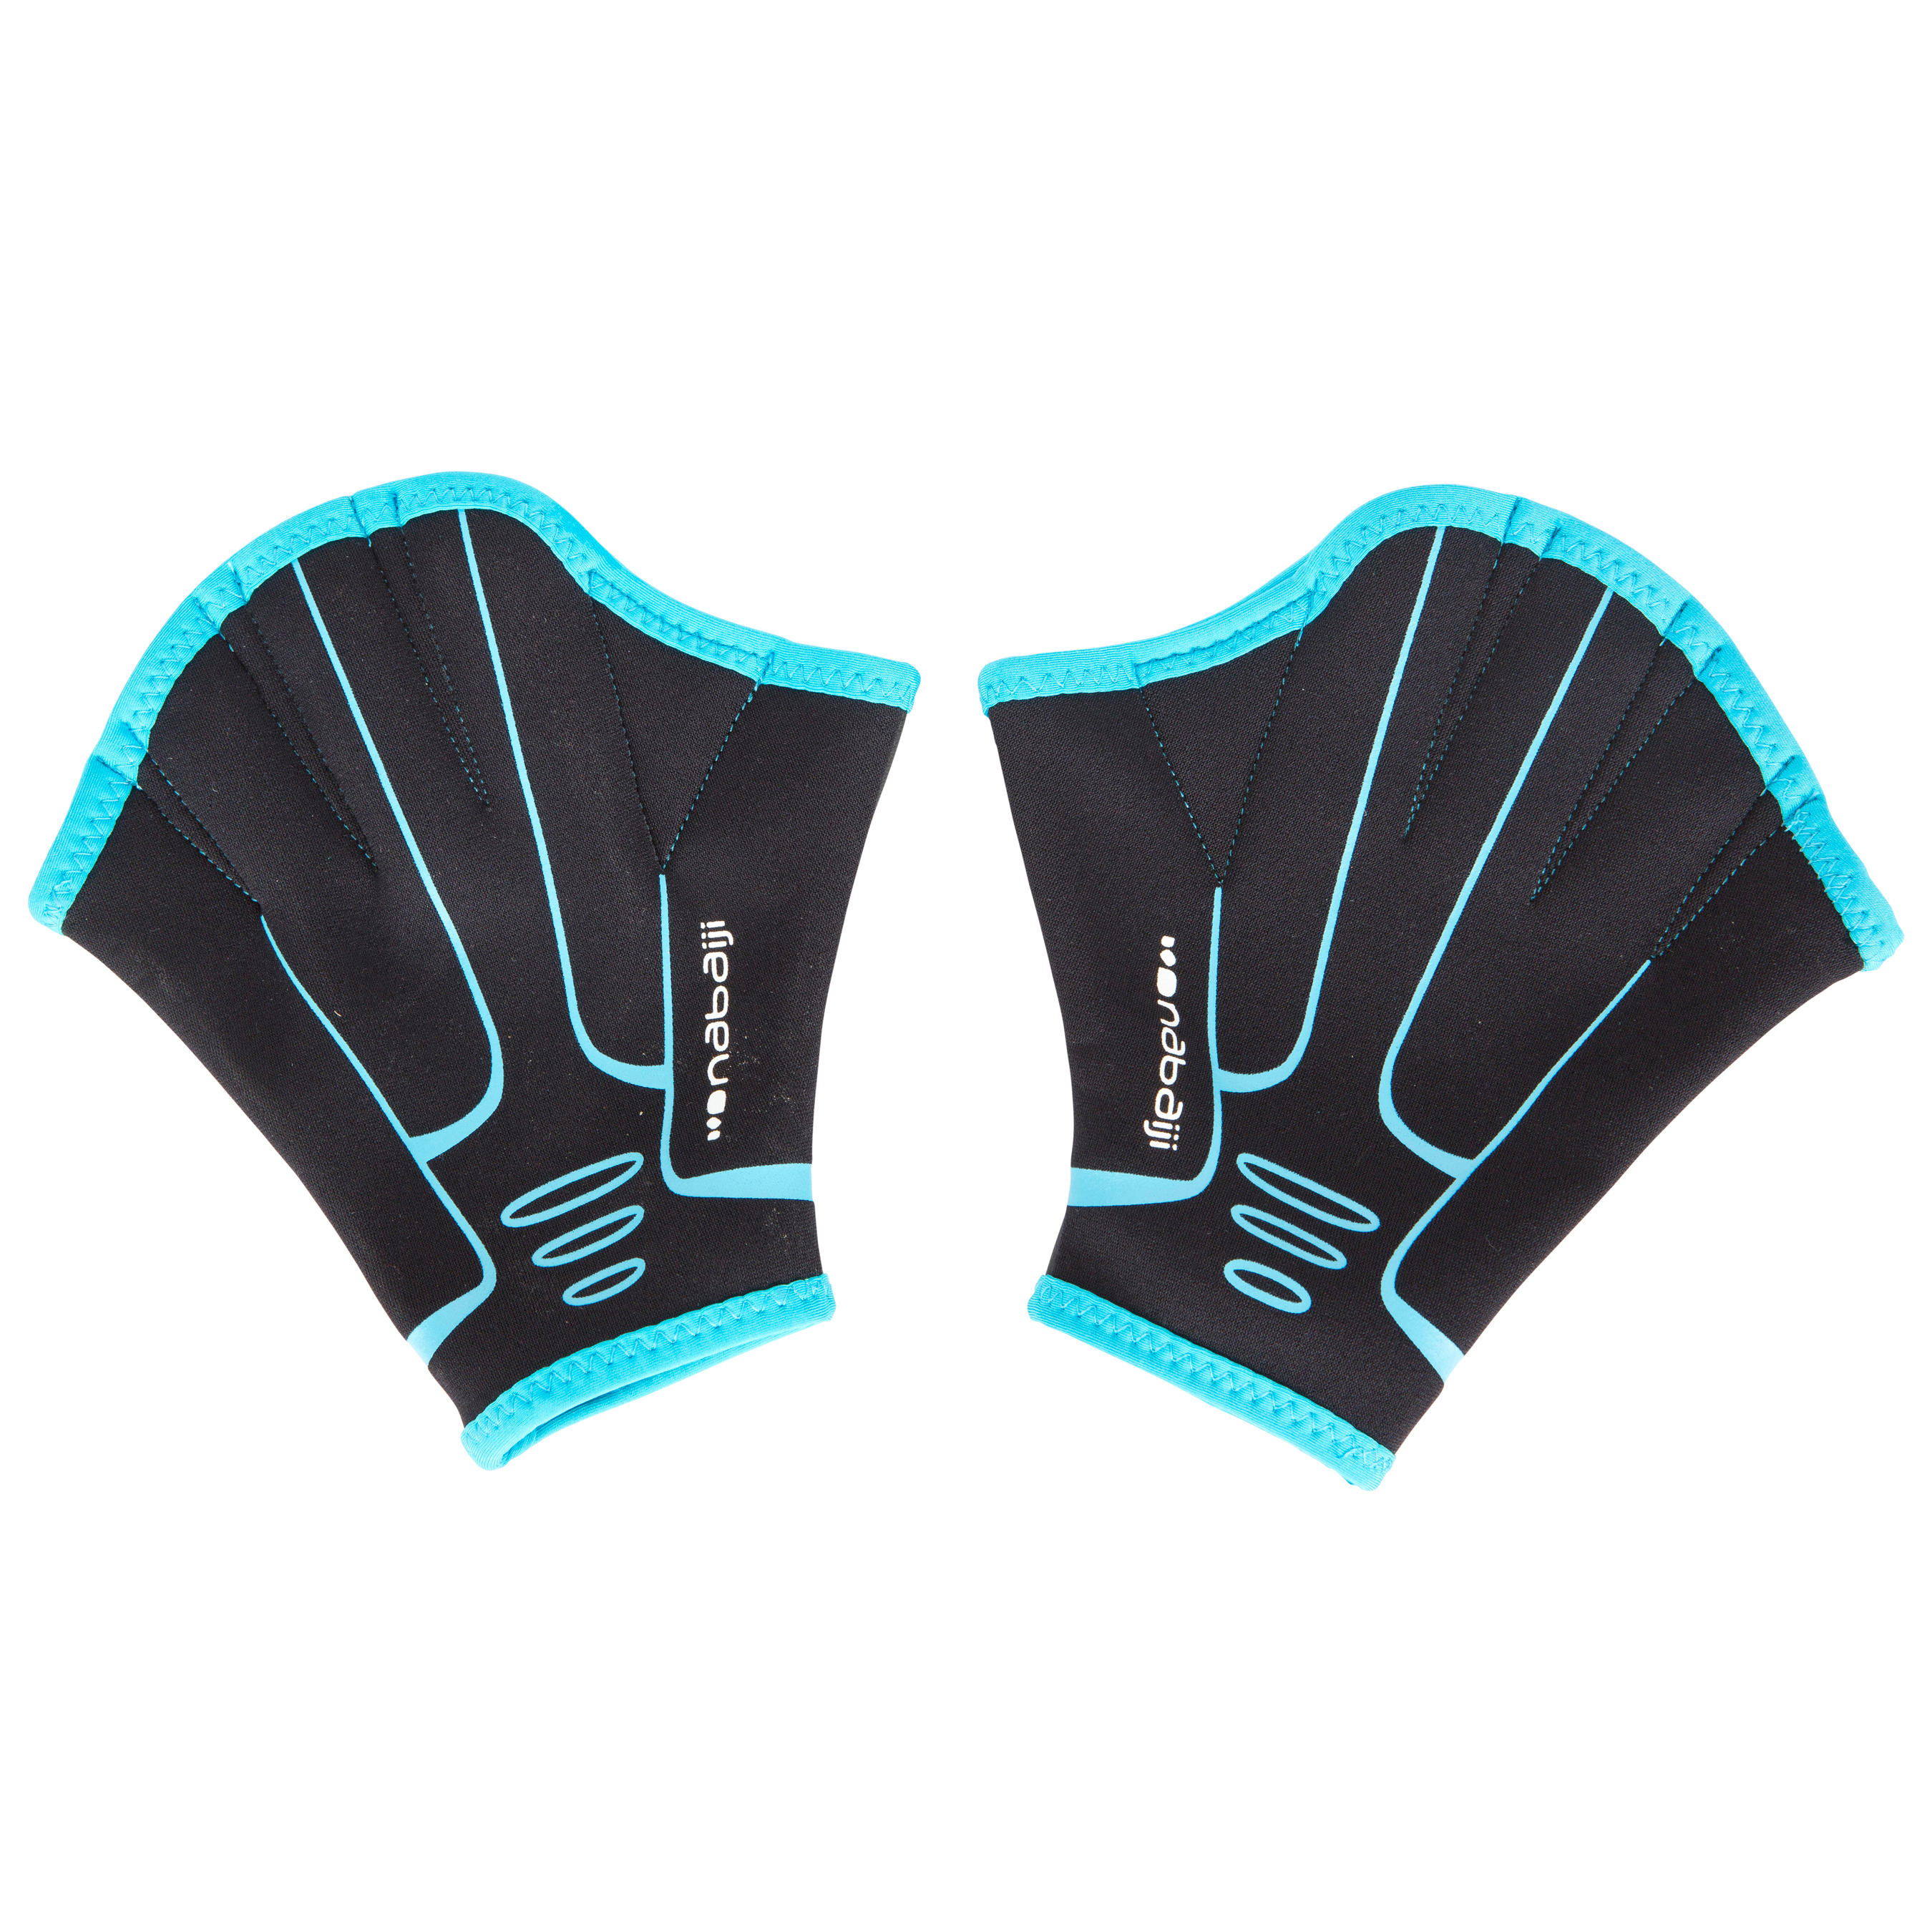 Webbed Aquafitness Gloves Blue 3/10